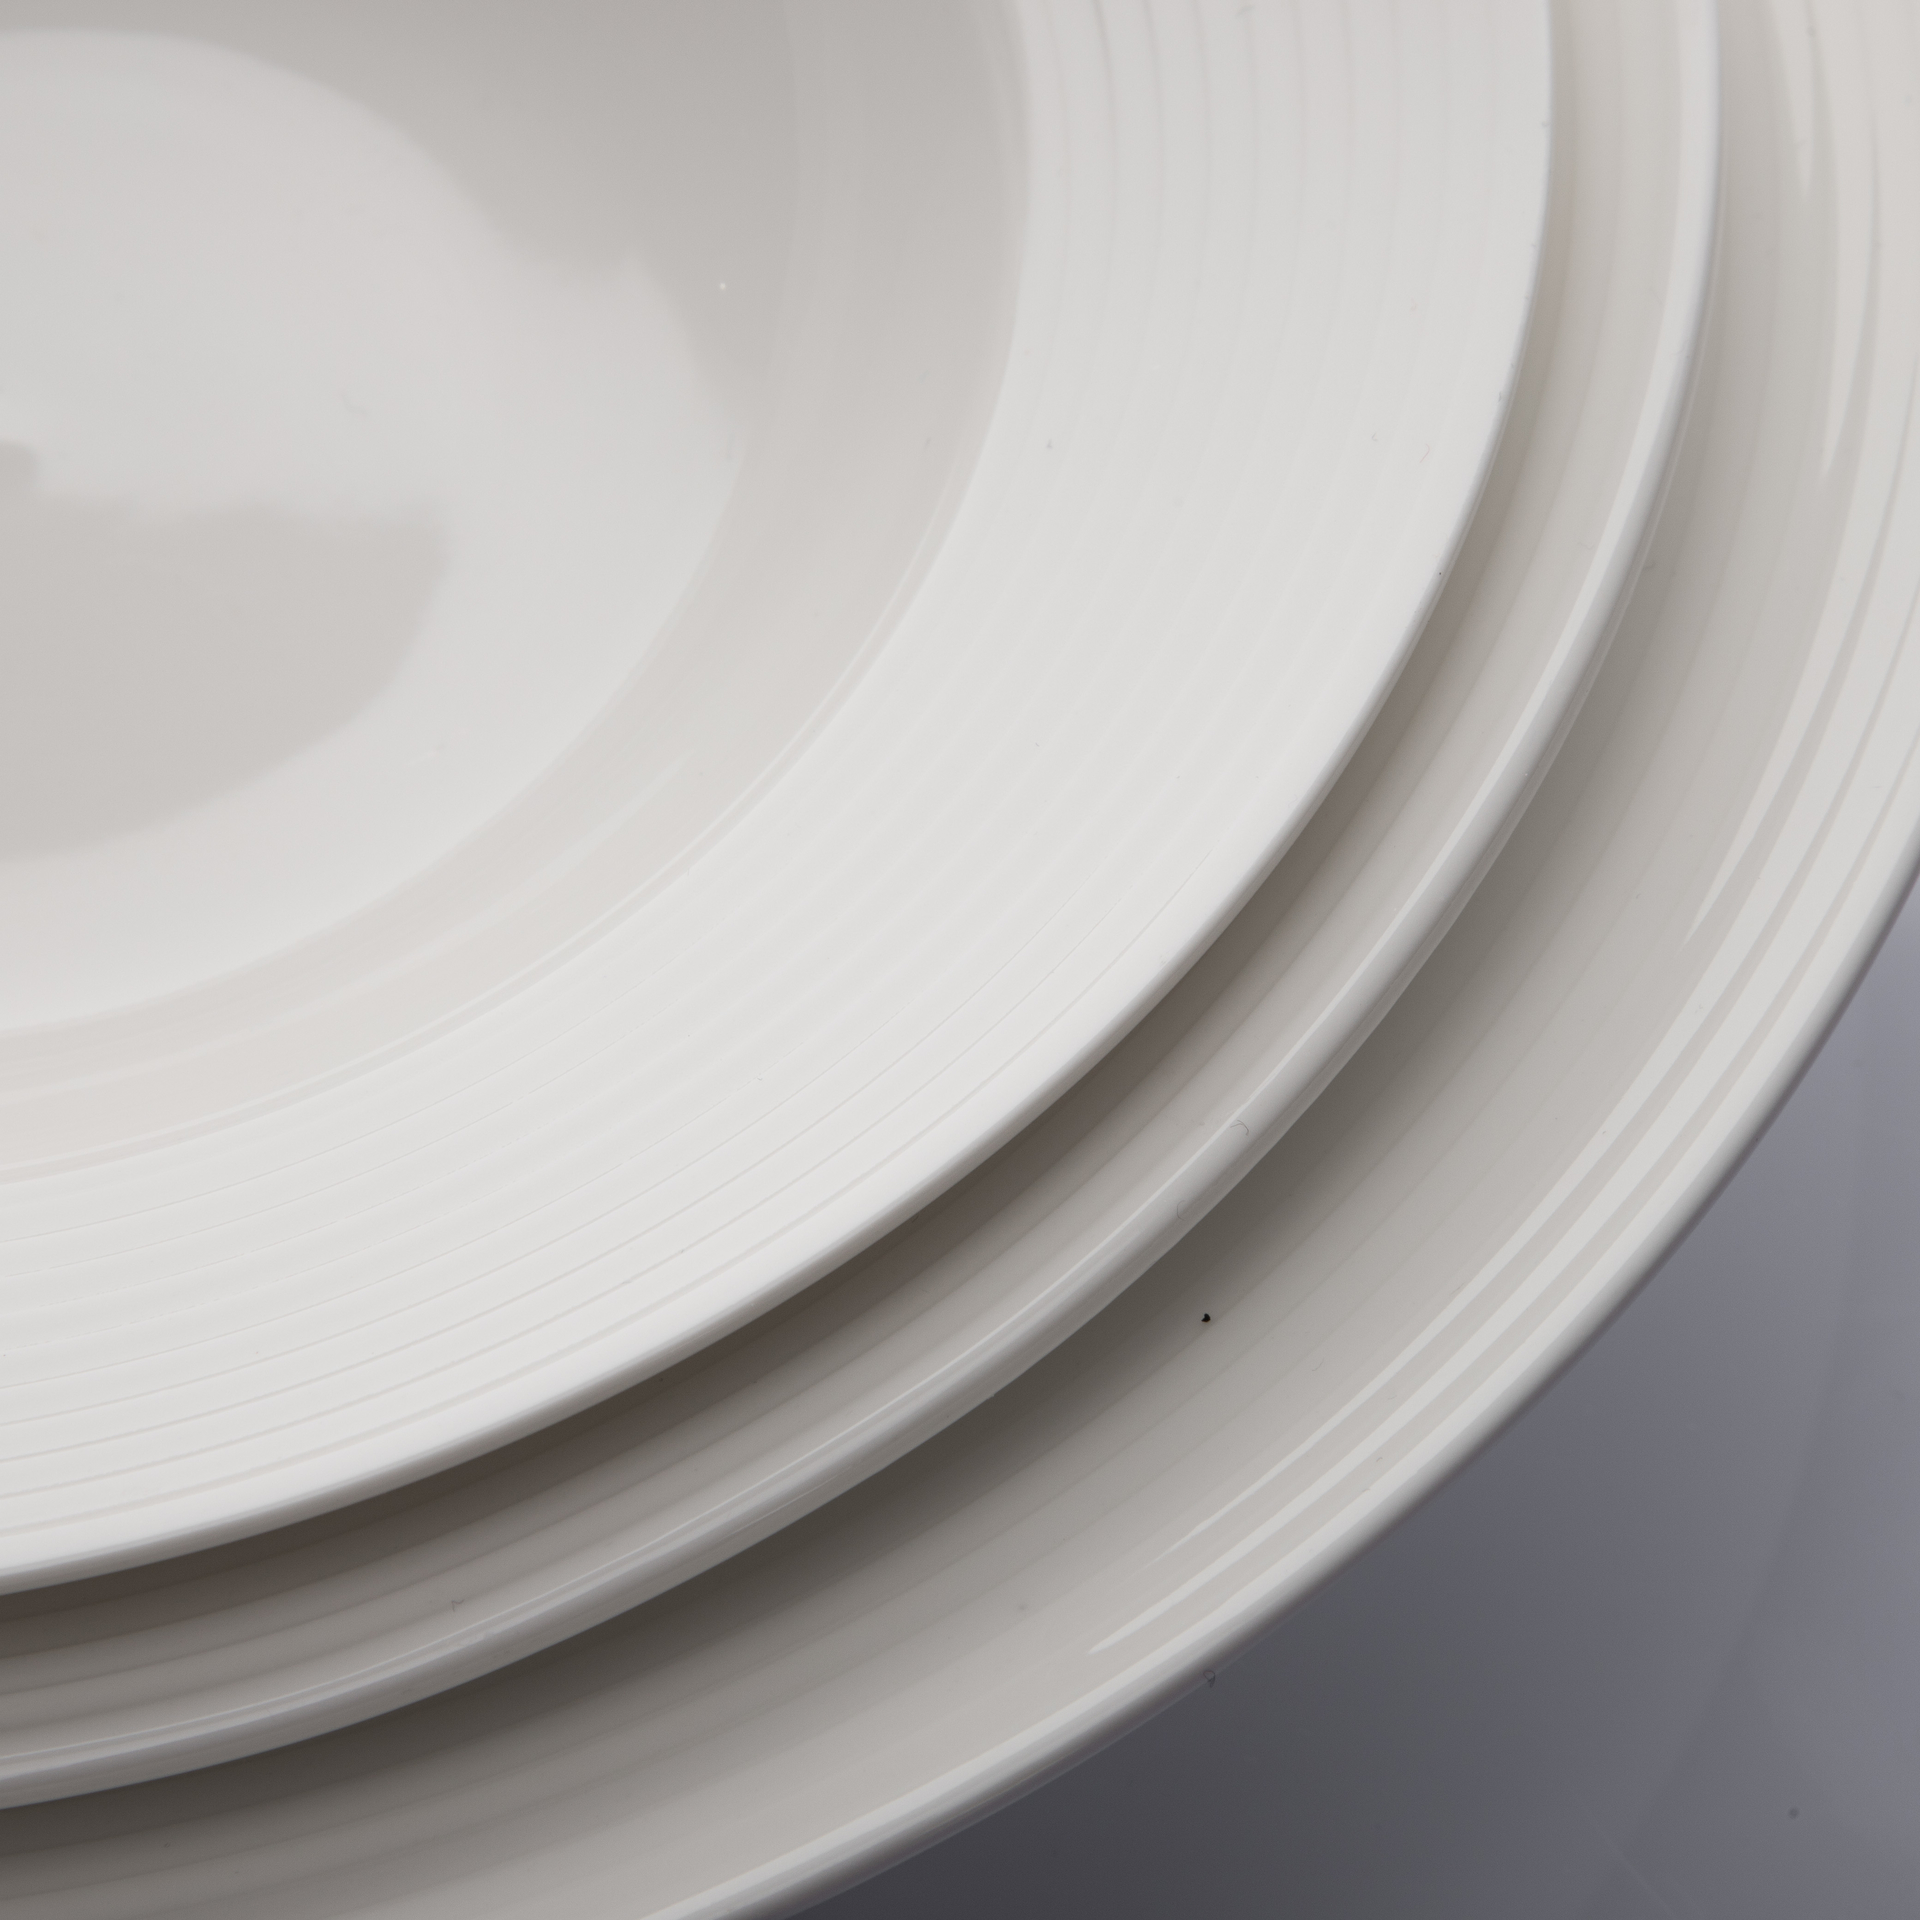 New Products Idea 2019 Oven Safe Catering White Ceramic Soup Plate Set, Platos Blancos de Porcelana para Restaurante%